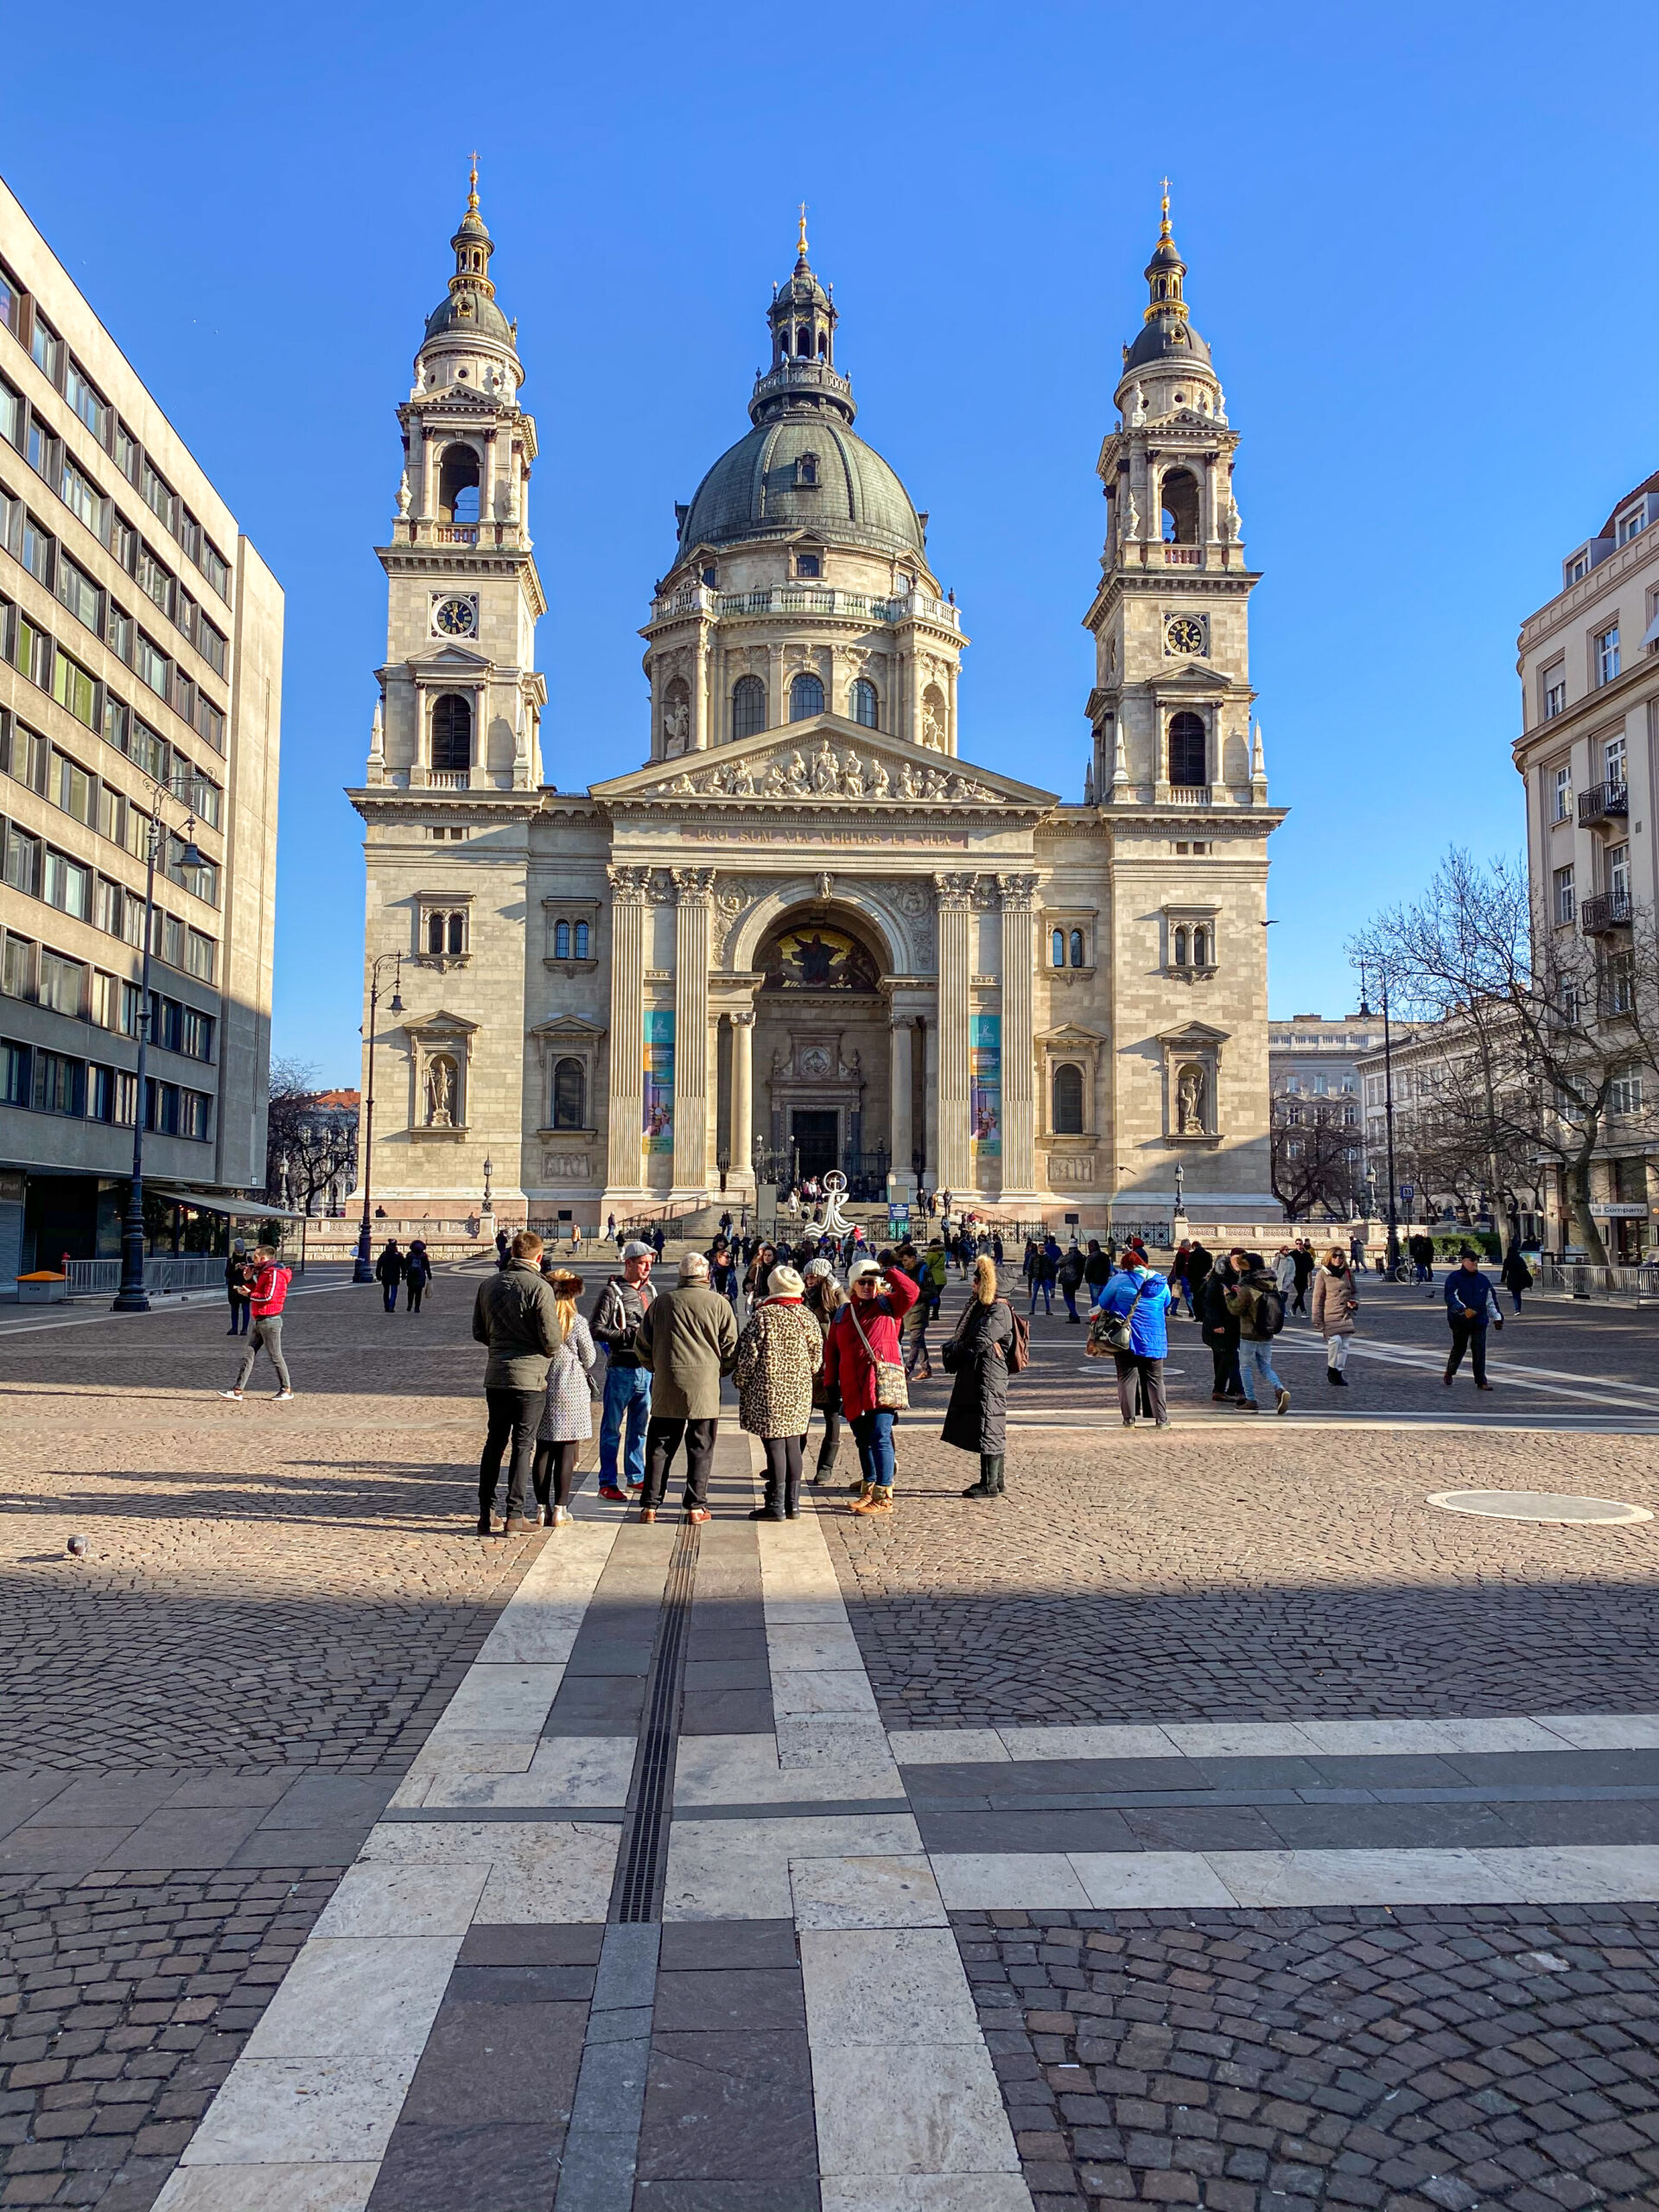 St. Stephen’s Basilica (Szent István Bazilika) – The Highest Church in Hungary!